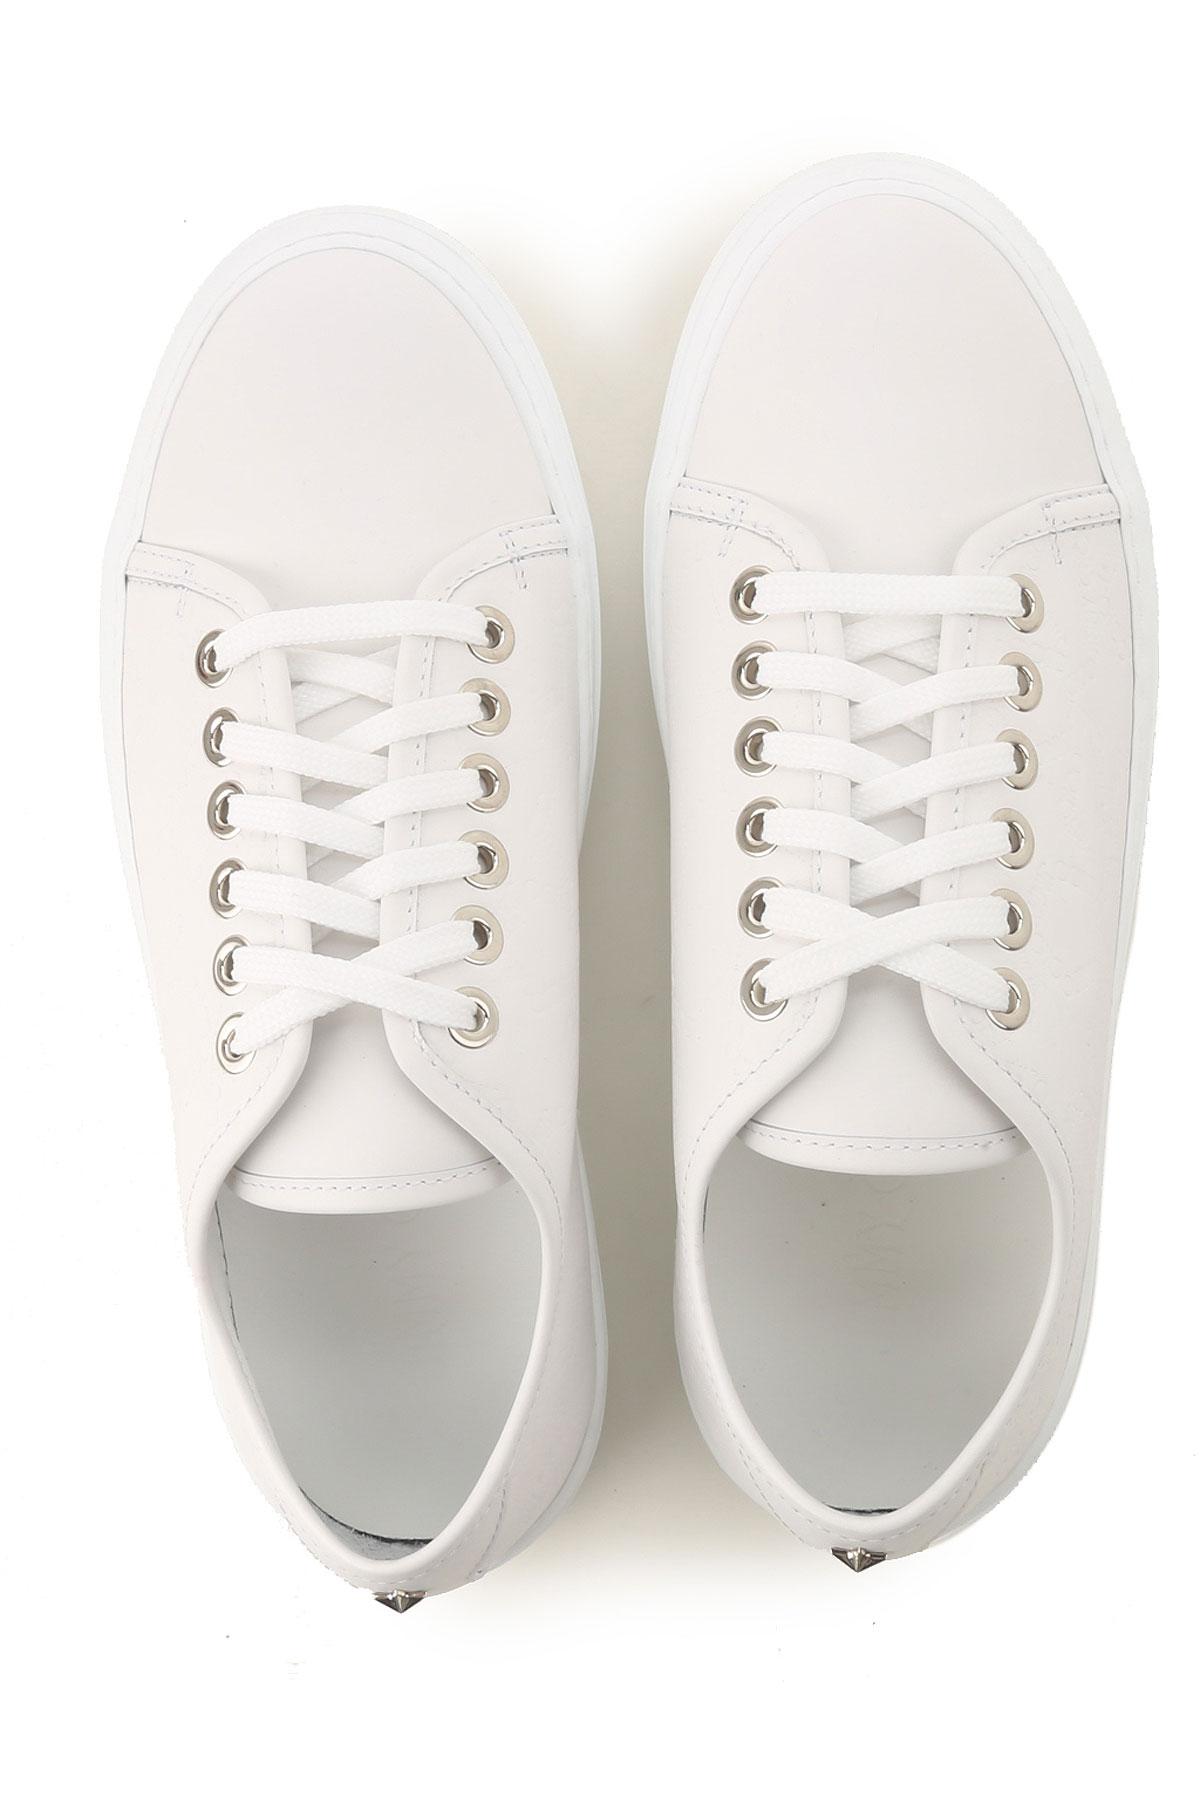 Jimmy Choo Sneakers For Men On Sale in White for Men - Lyst